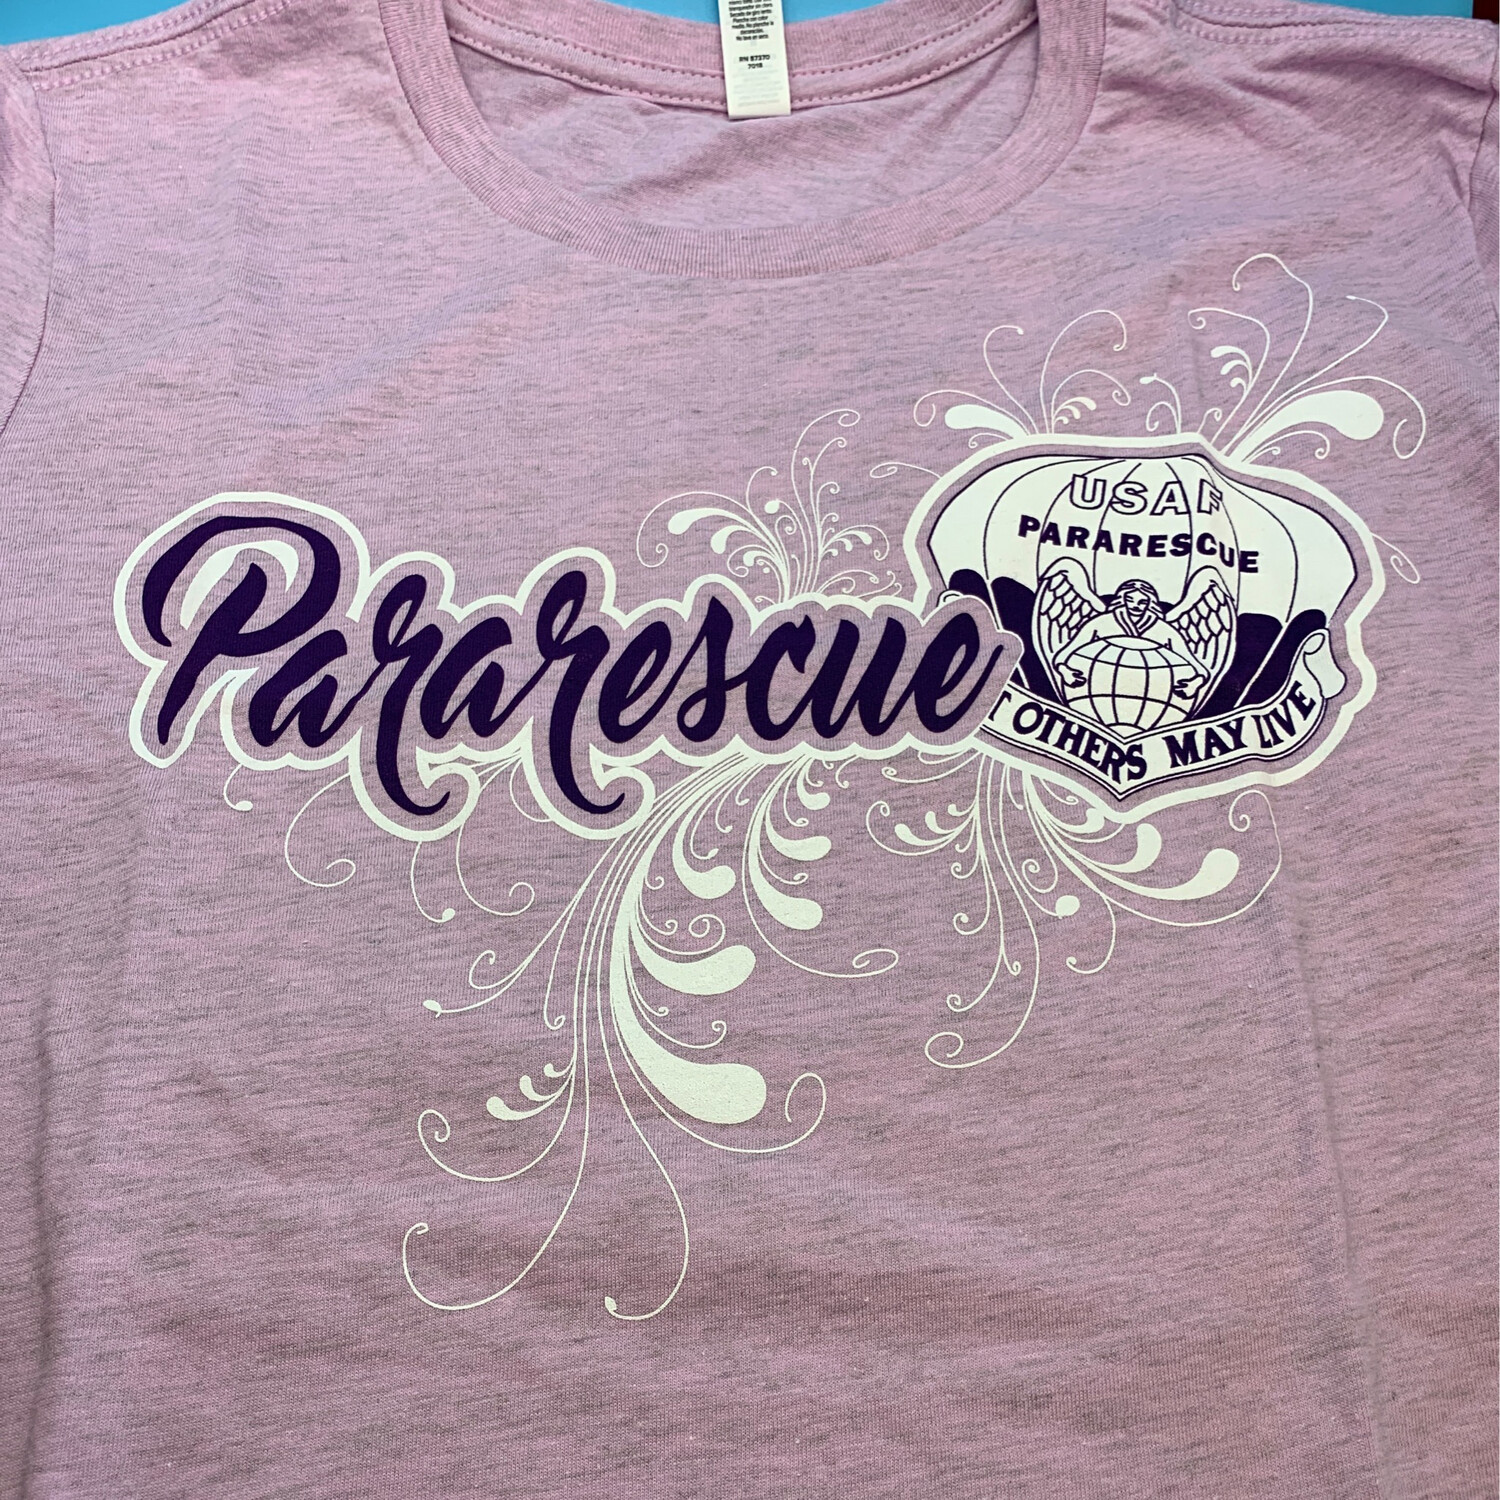 pja/ T-Shirt Light Pink Ladies, Pararescue With PJ Flash